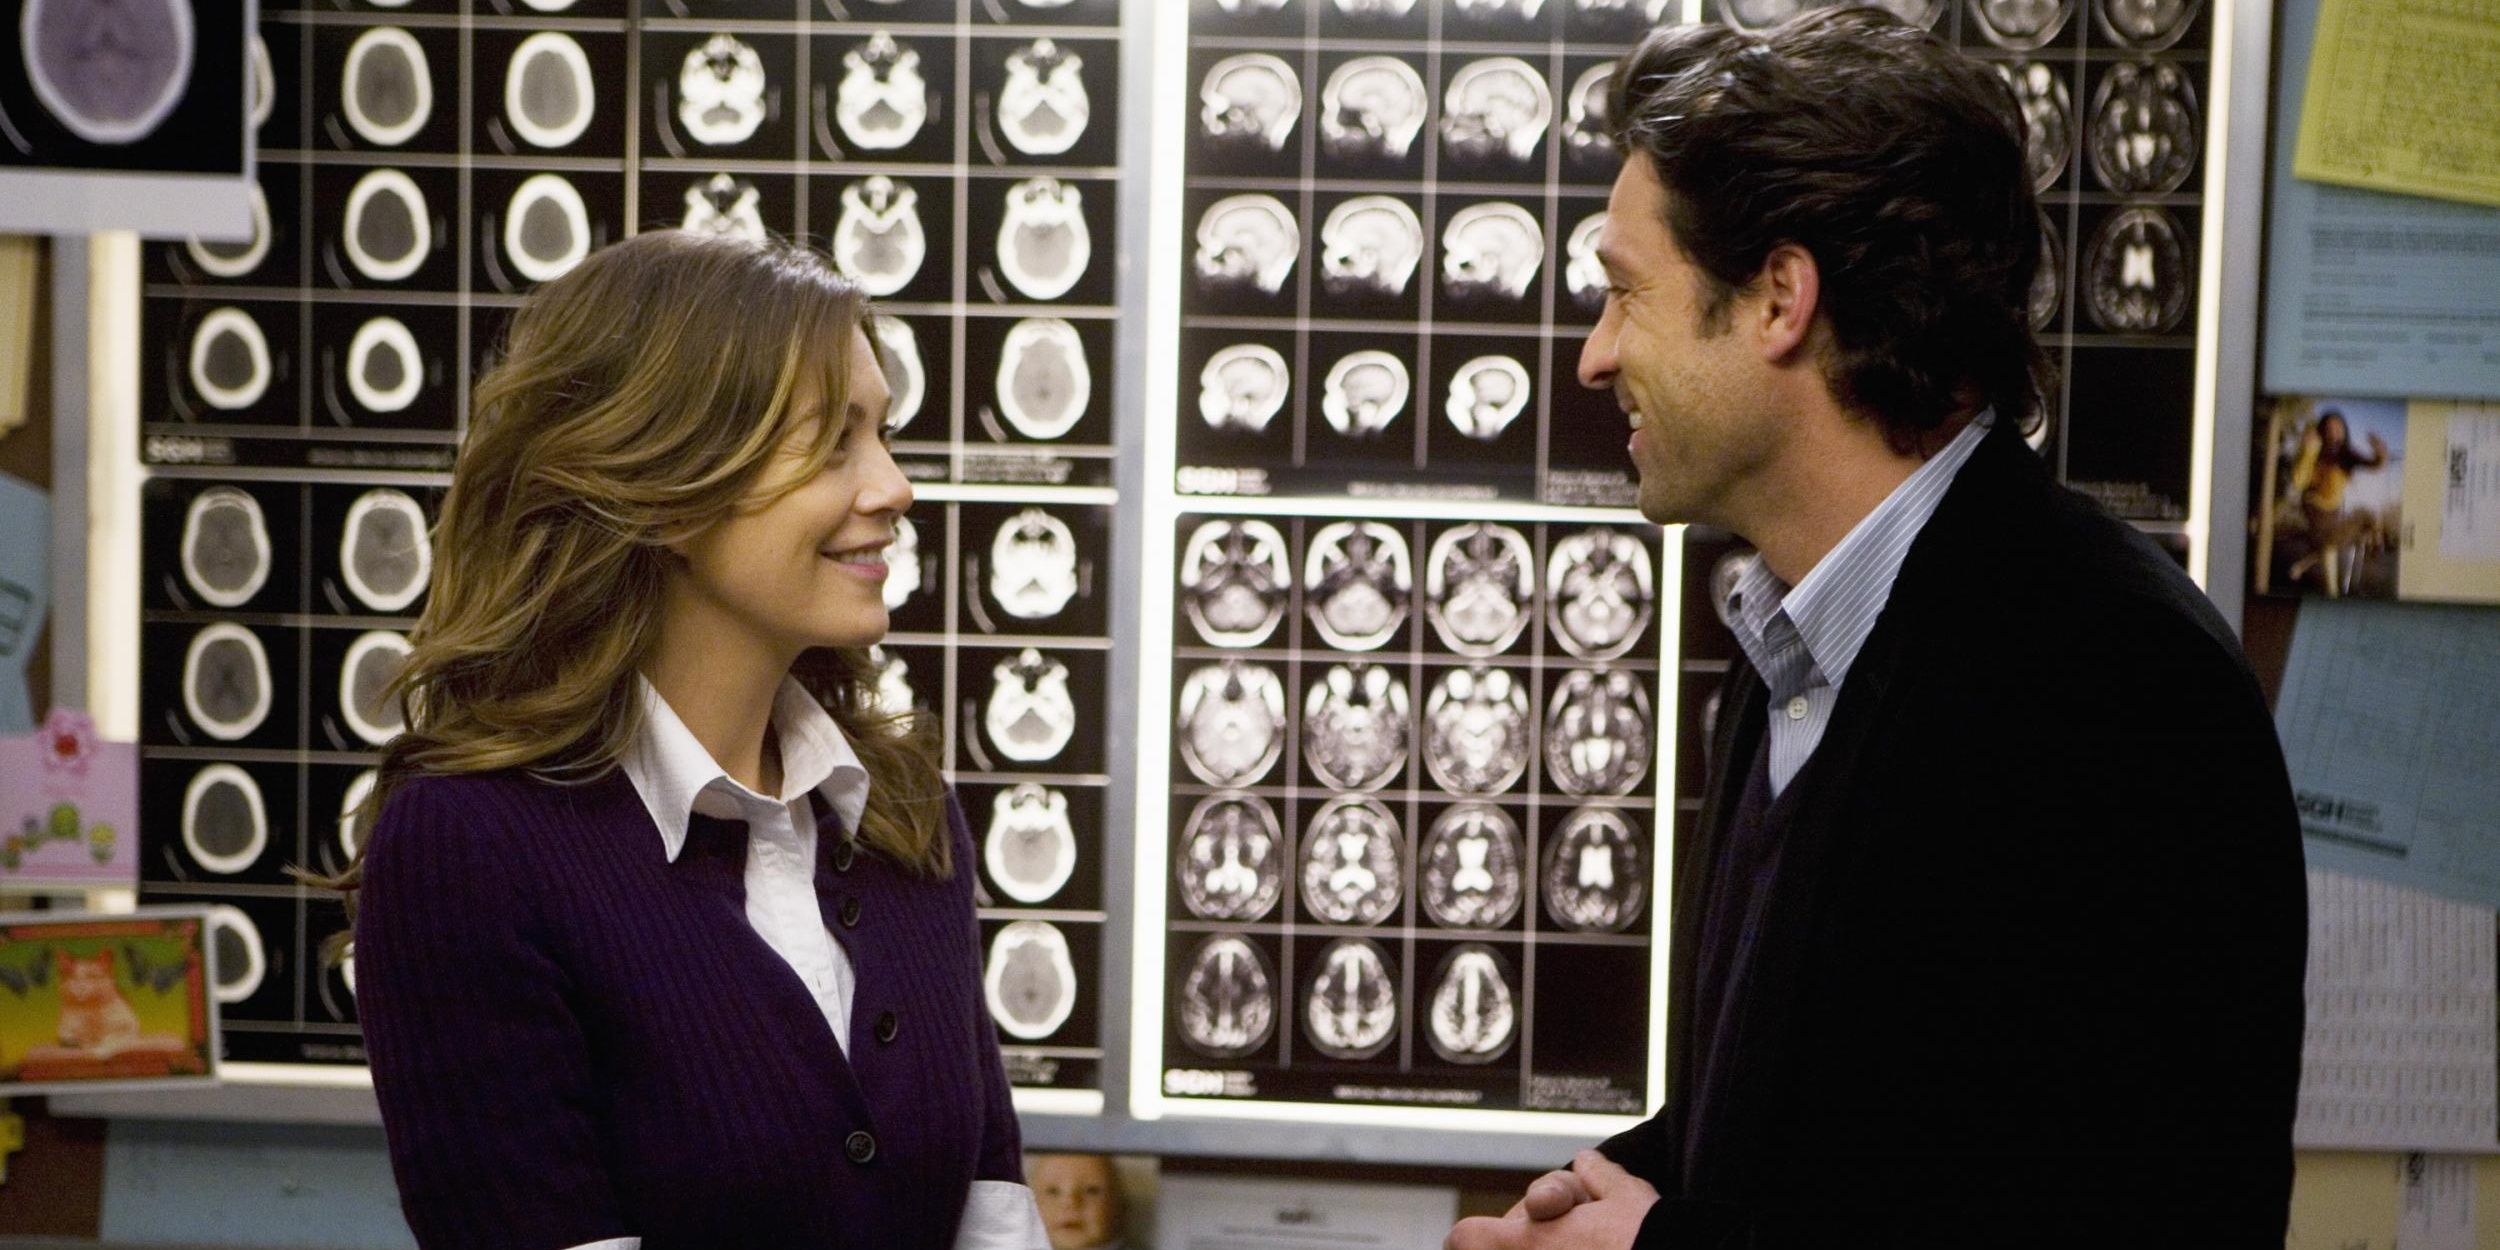 Derek proposes to Meredith inside an elevator in Grey's Anatomy